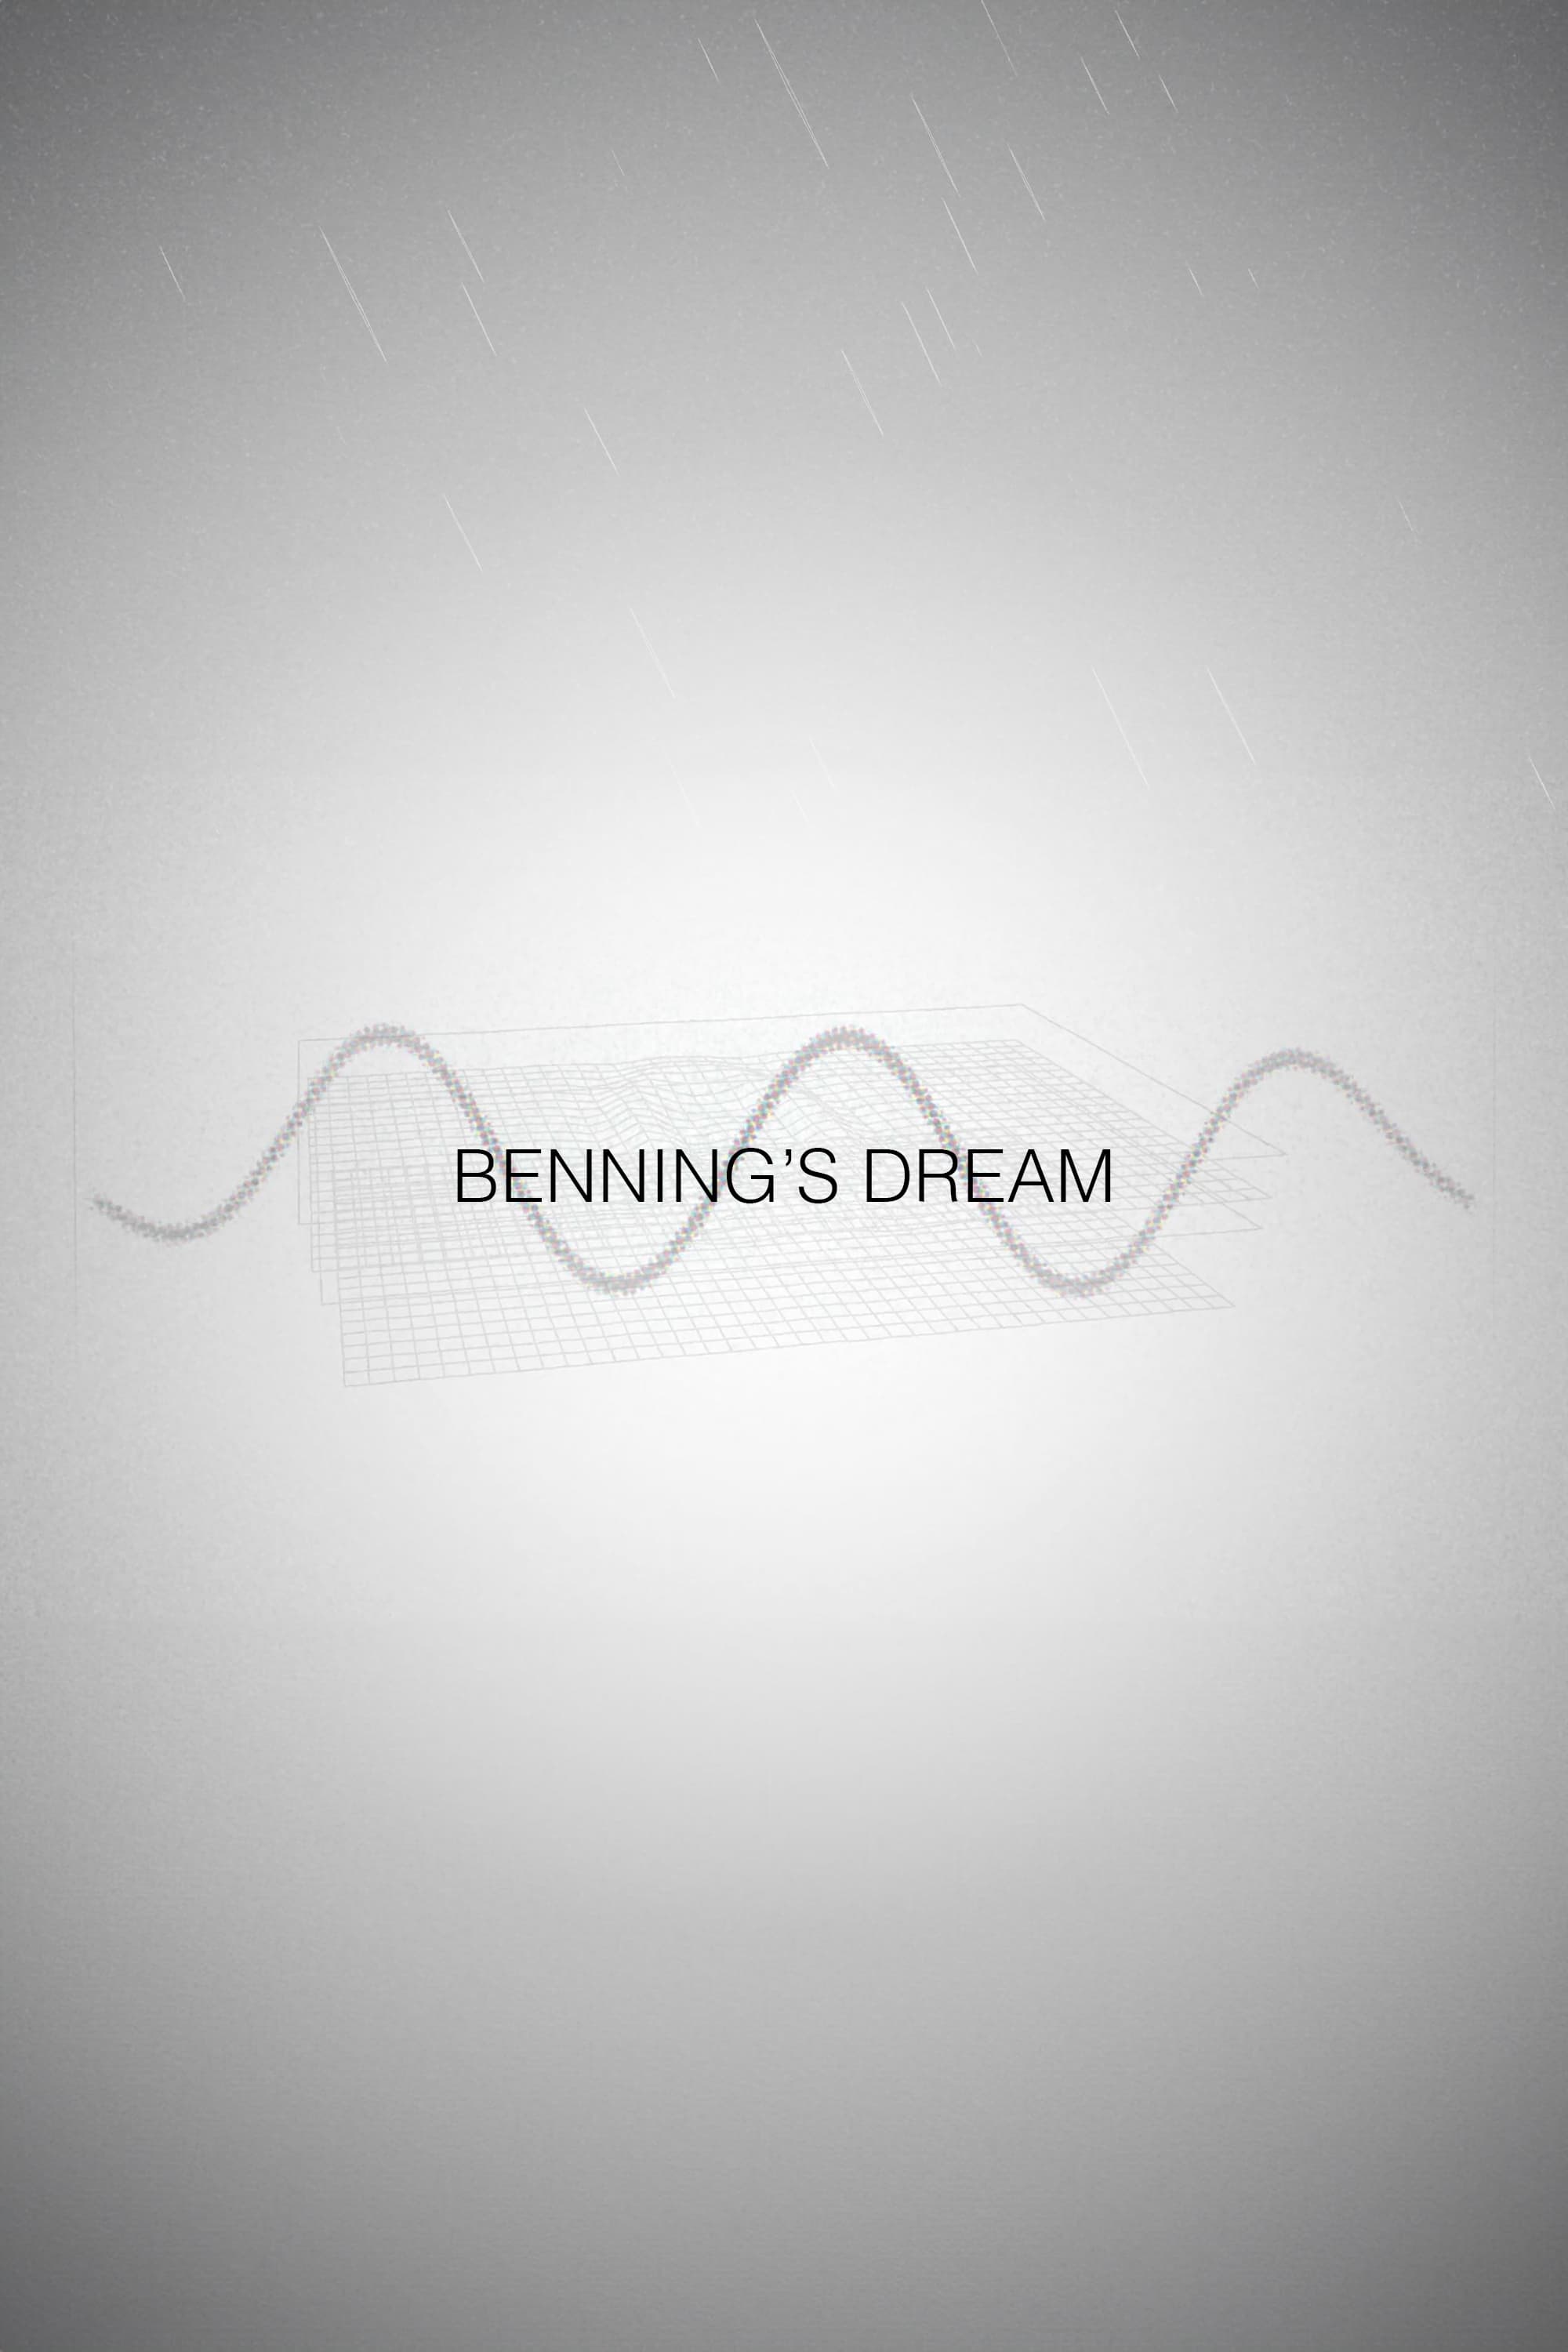 Benning's Dream